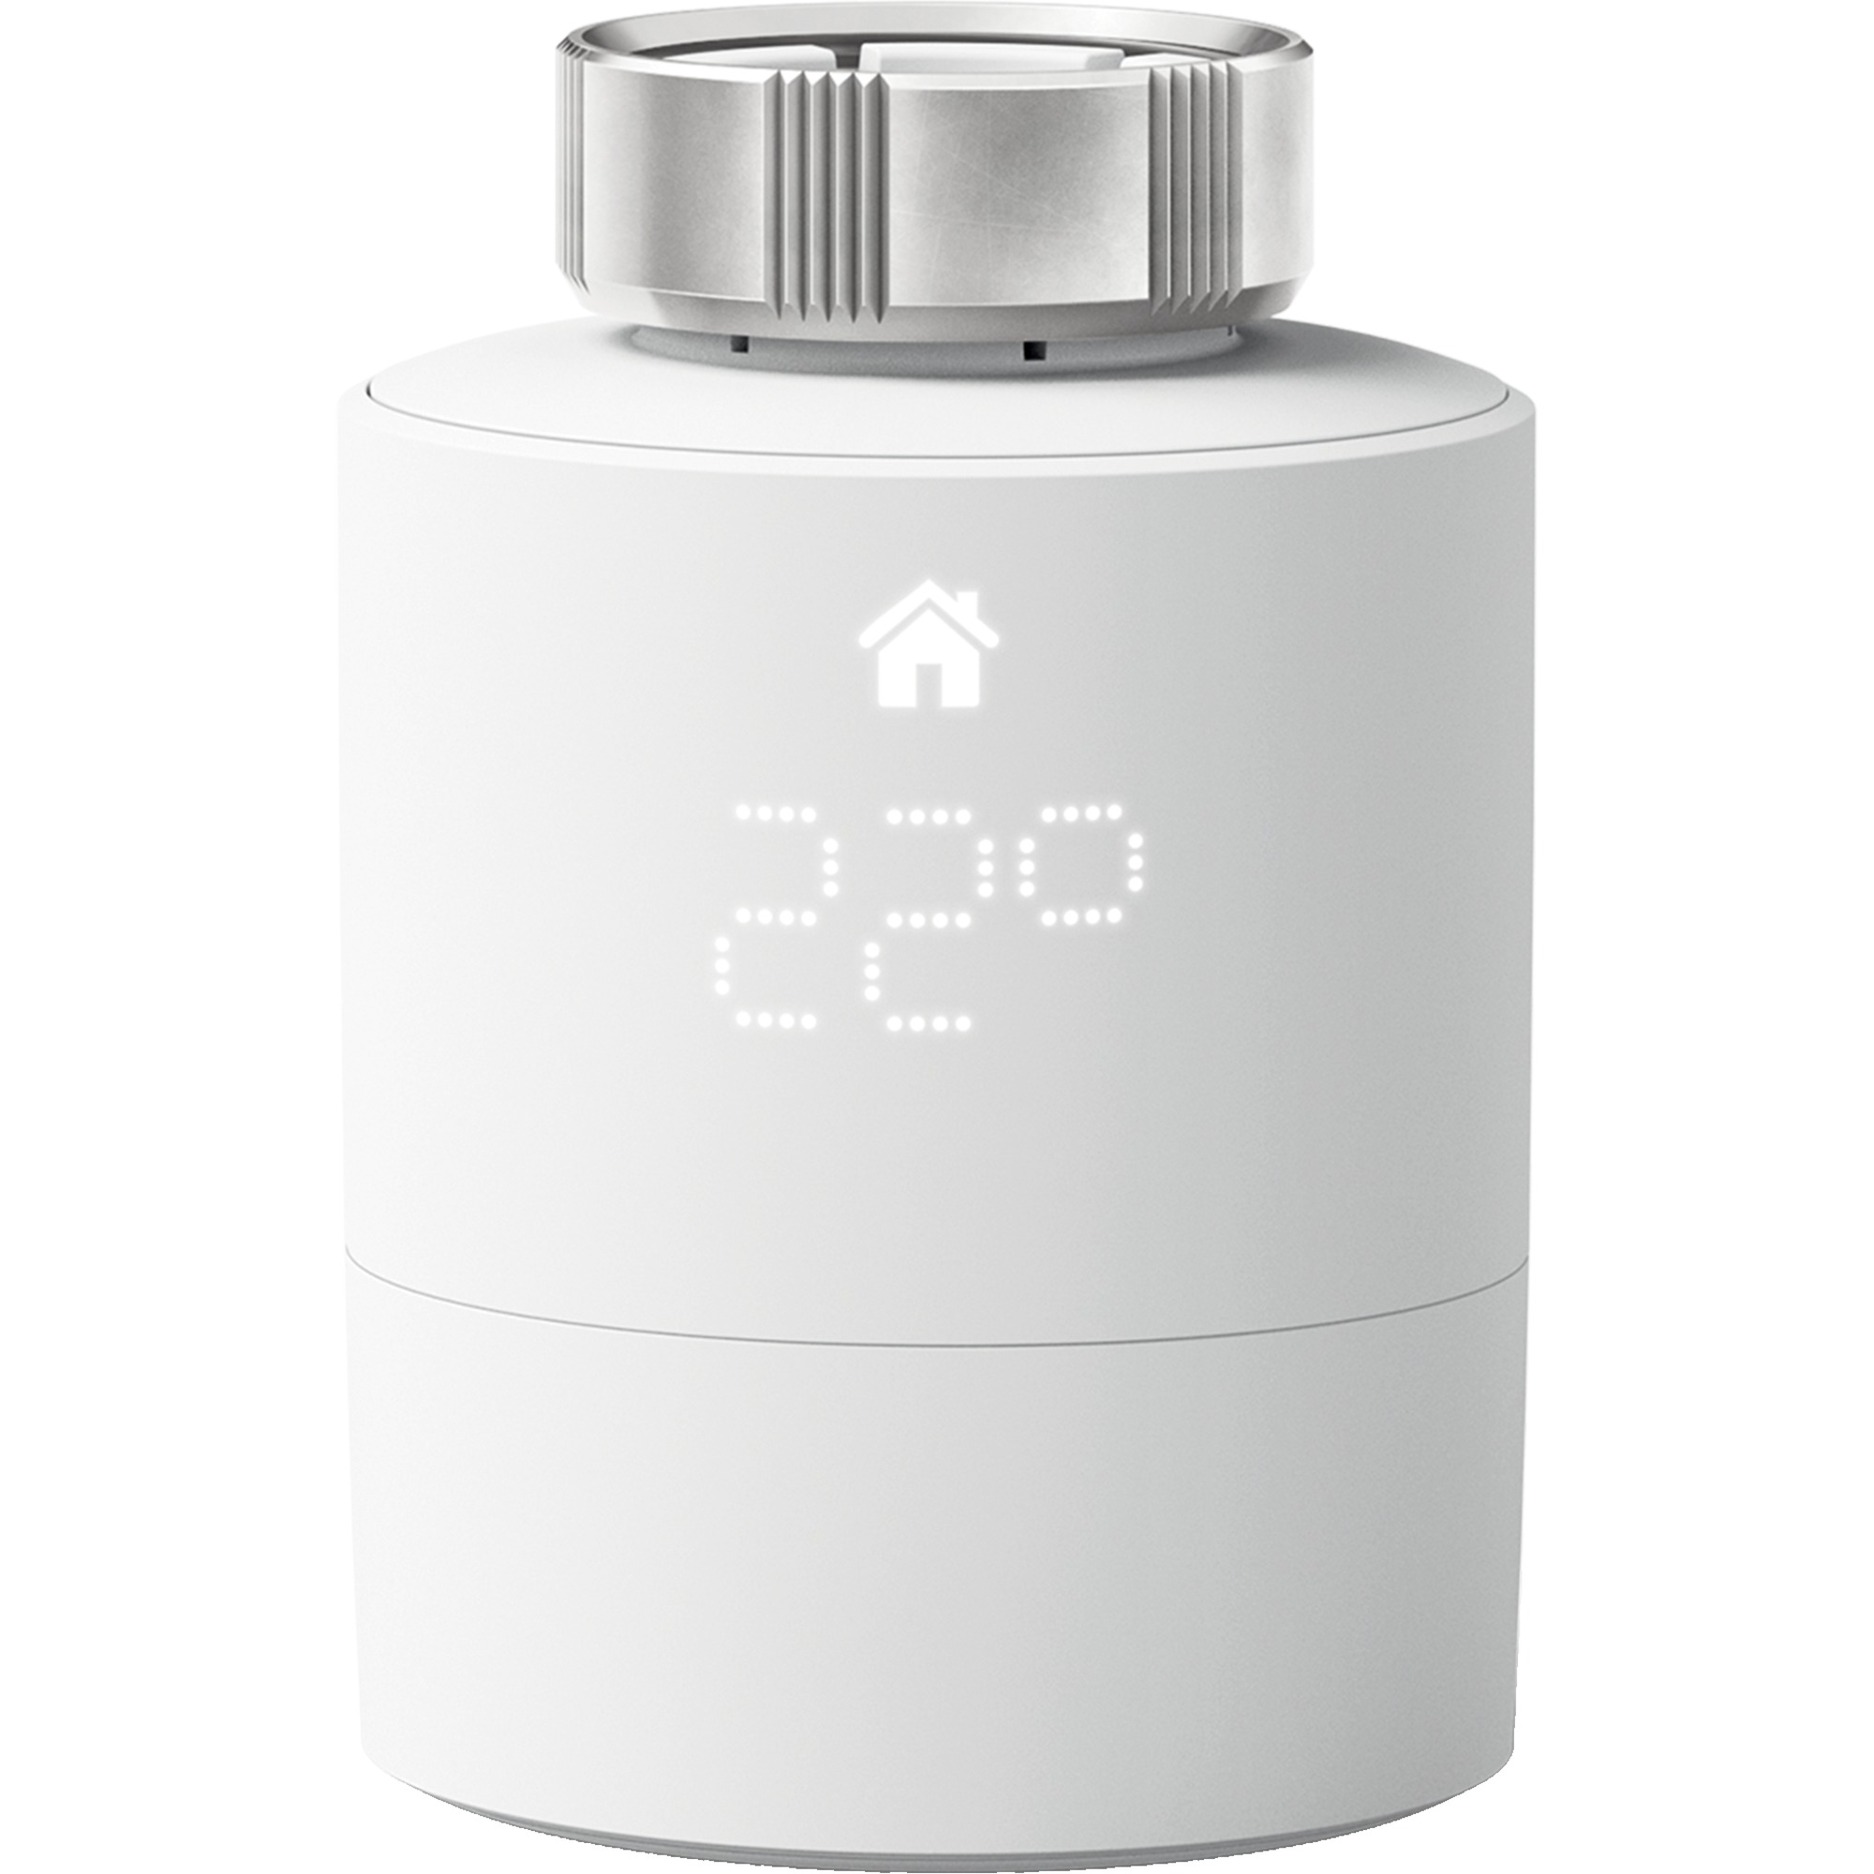 Smartes Heizkörper-Thermostat, Heizungsthermostat